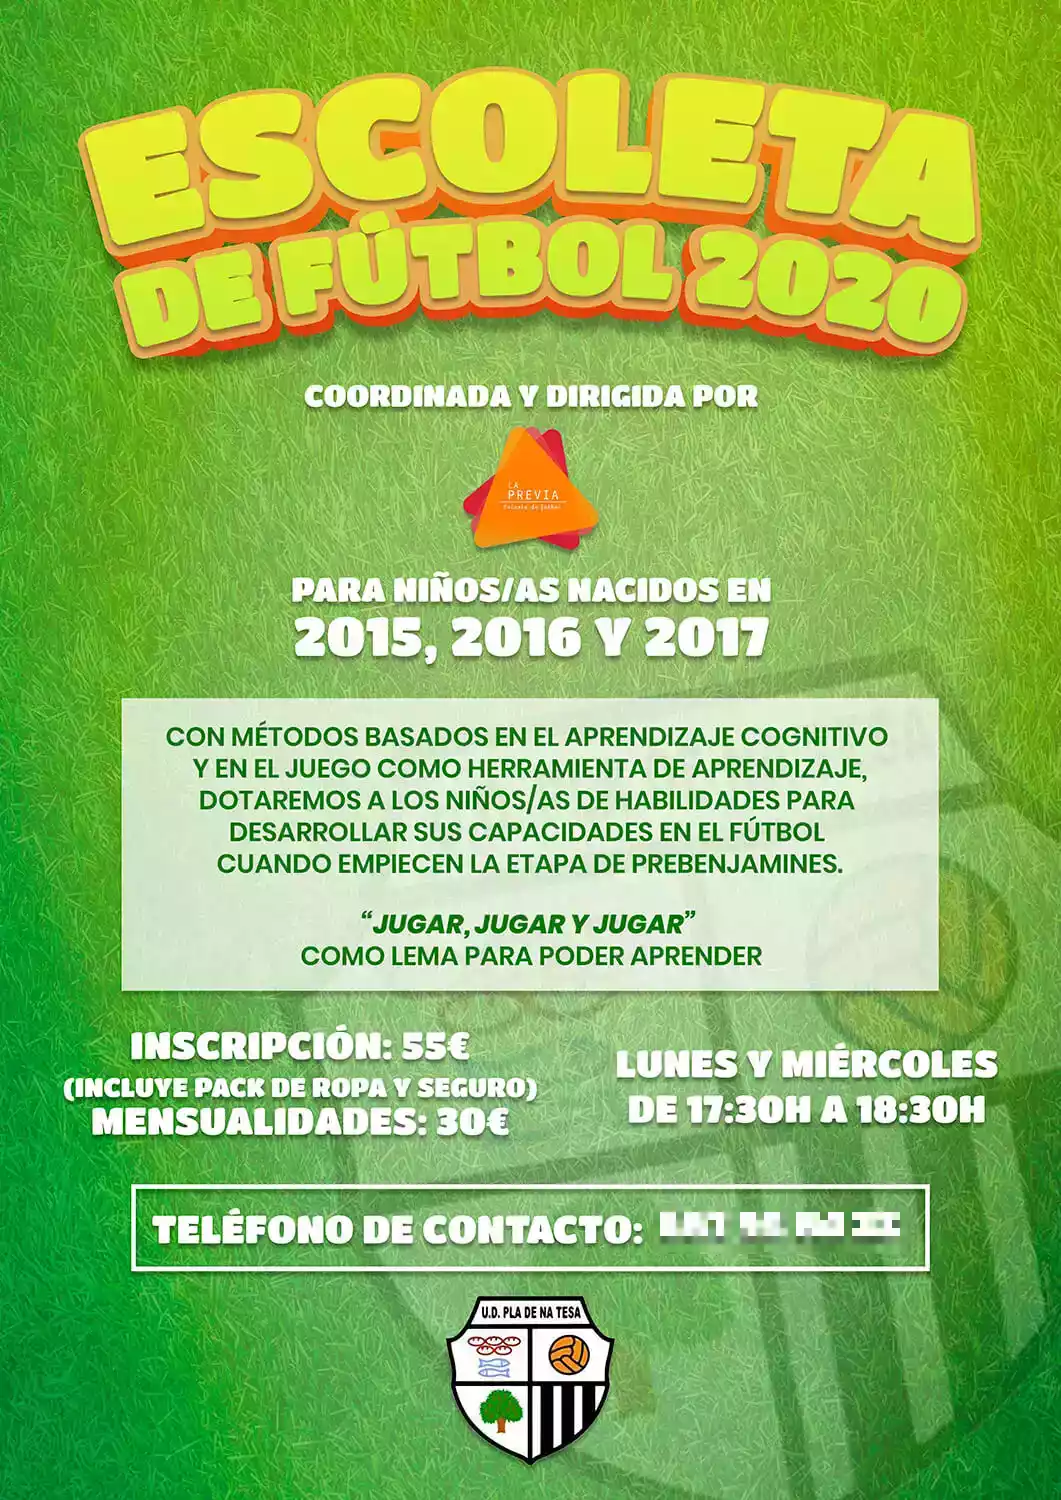 Football School for kids